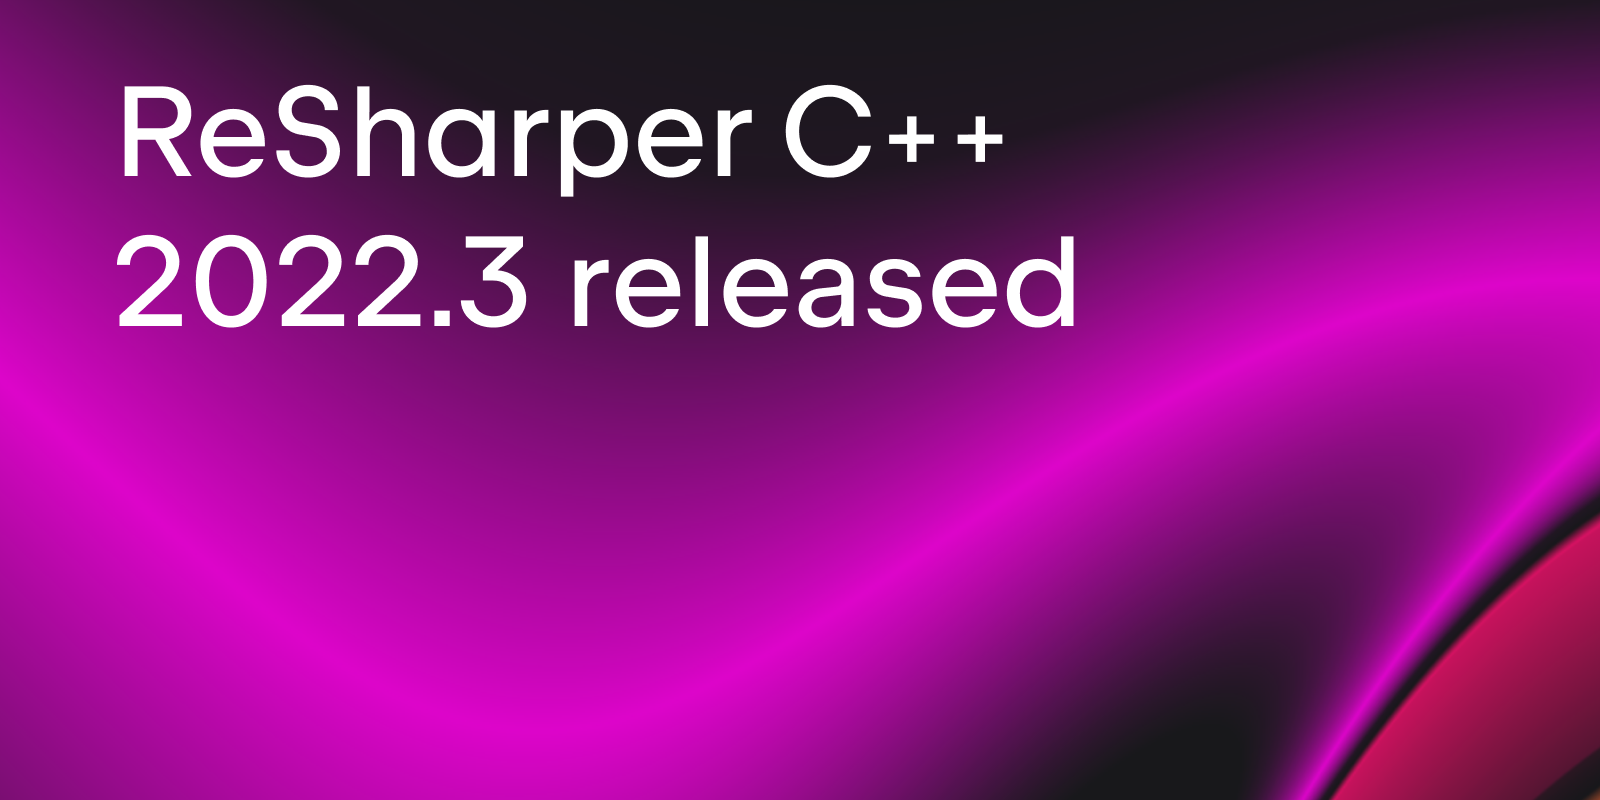 ReSharper C++ 2022.3